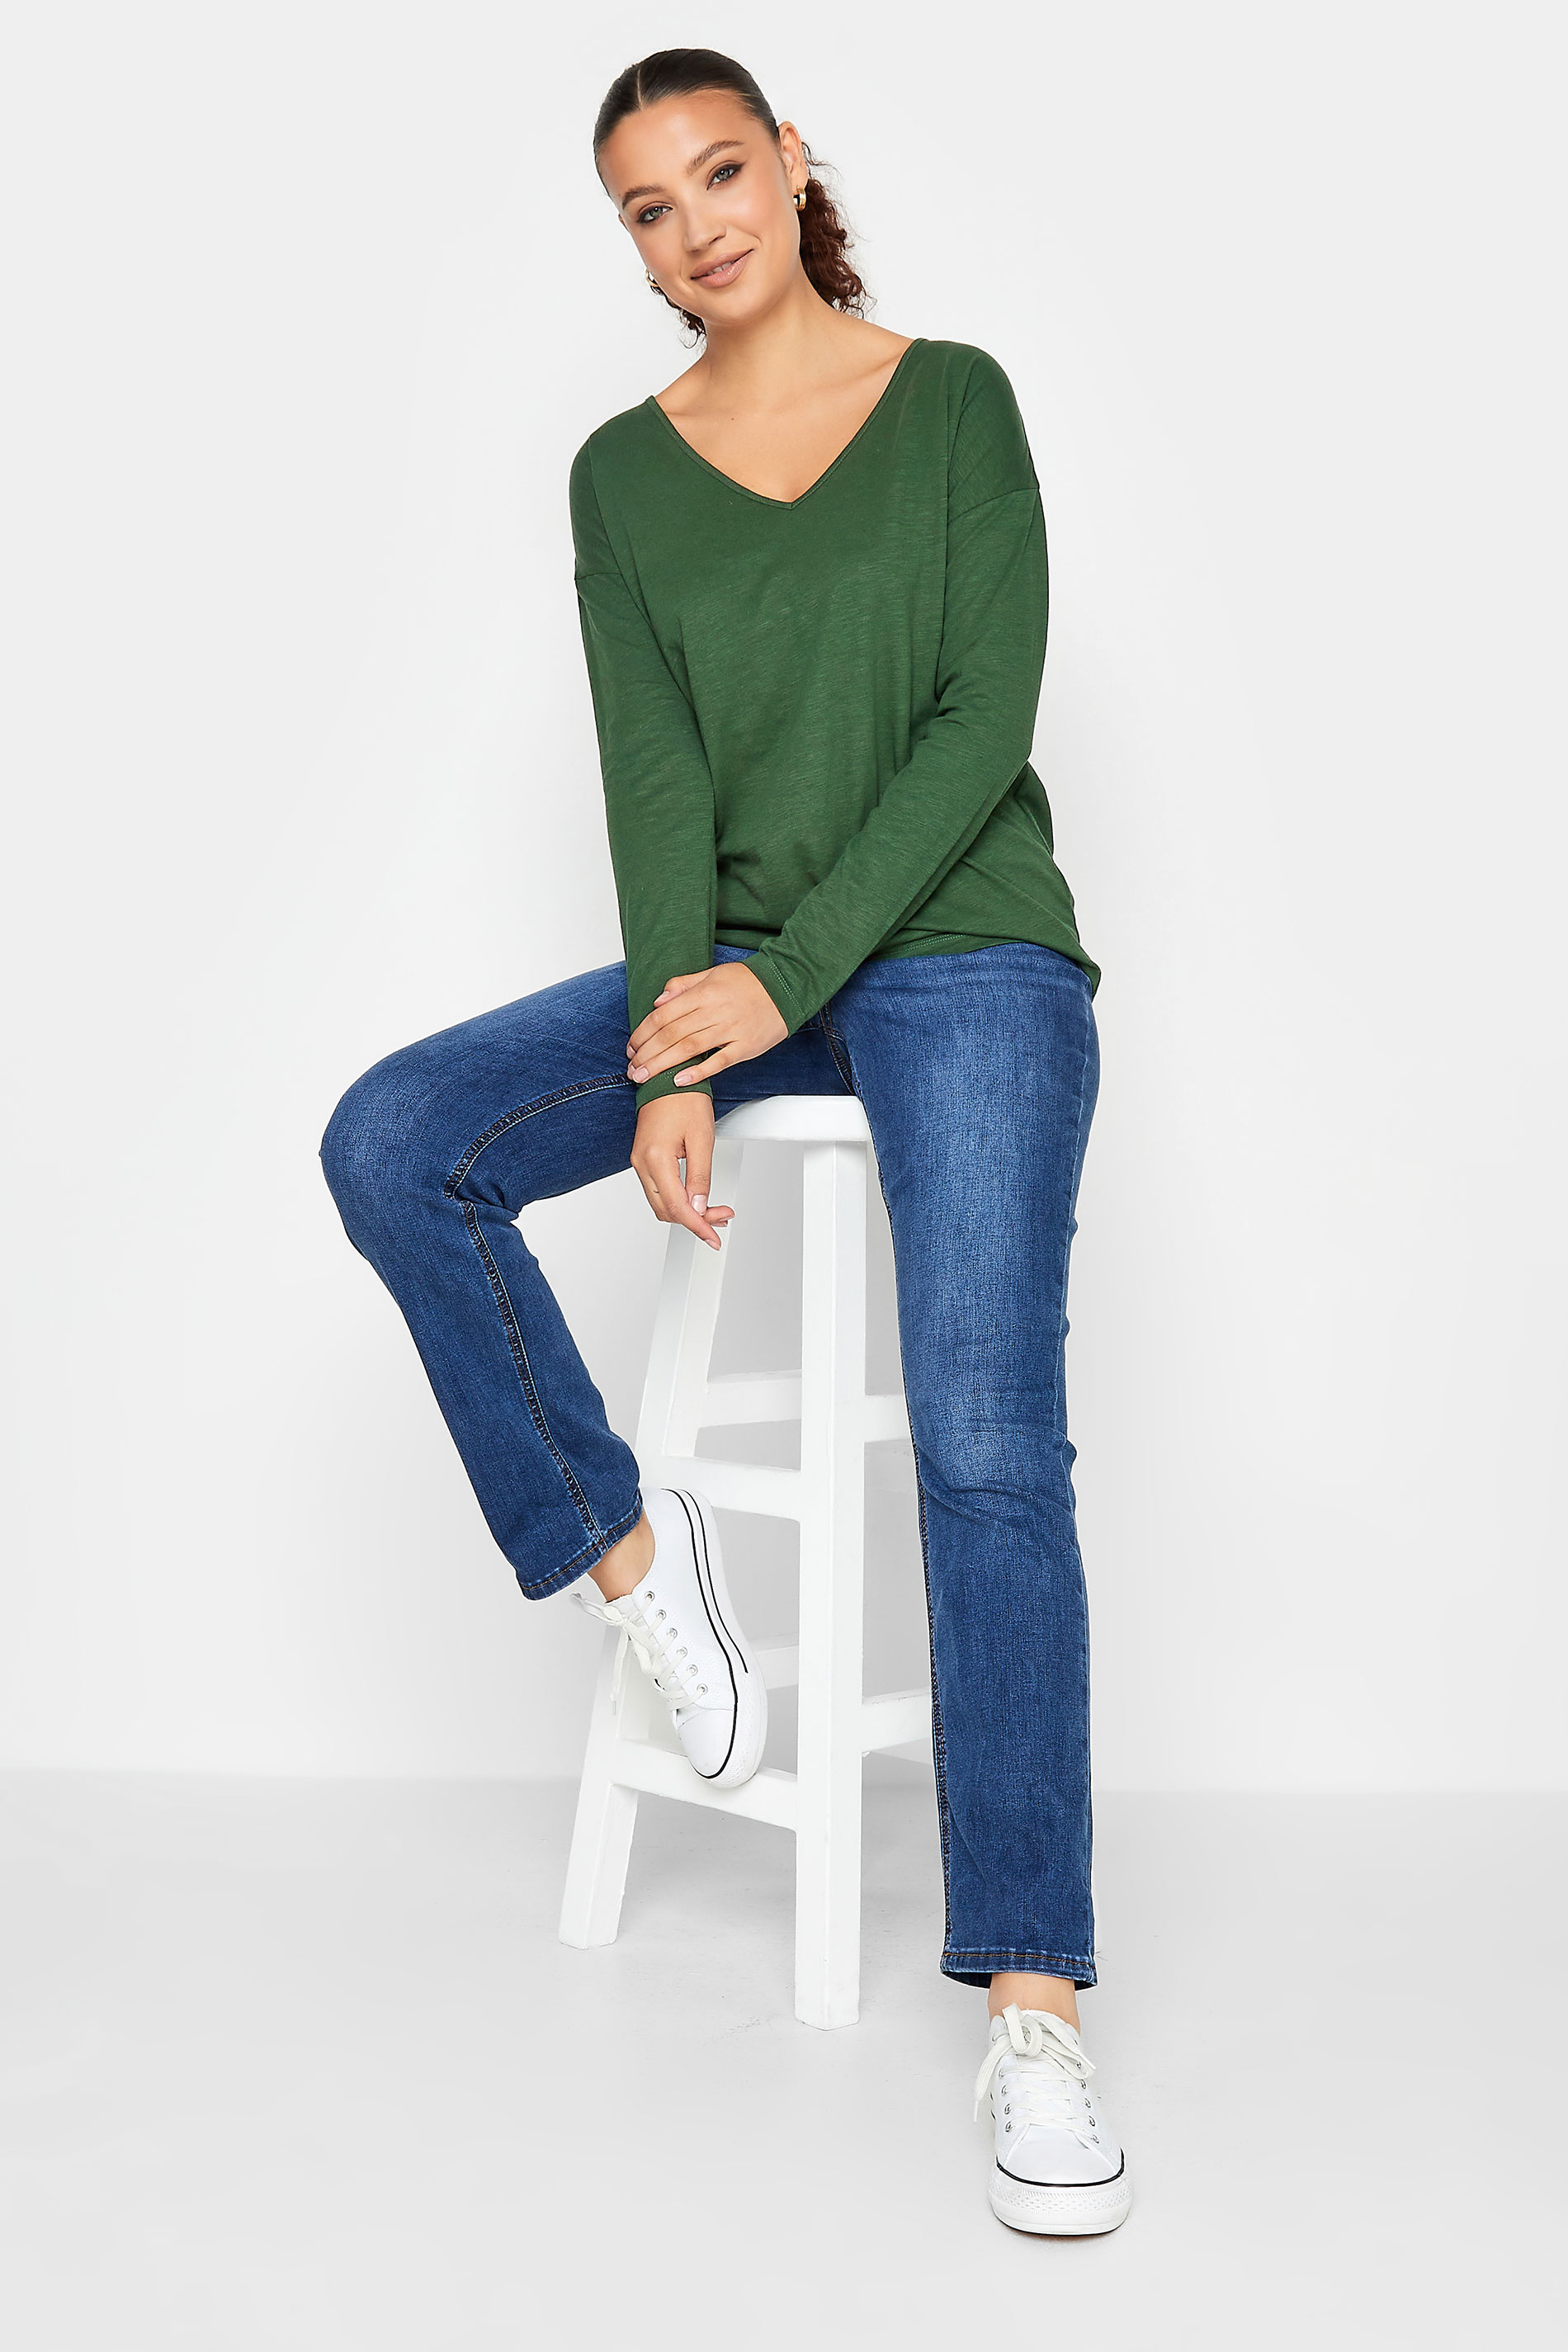 LTS Tall Green V-Neck Long Sleeve Cotton T-Shirt | Long Tall Sally 2